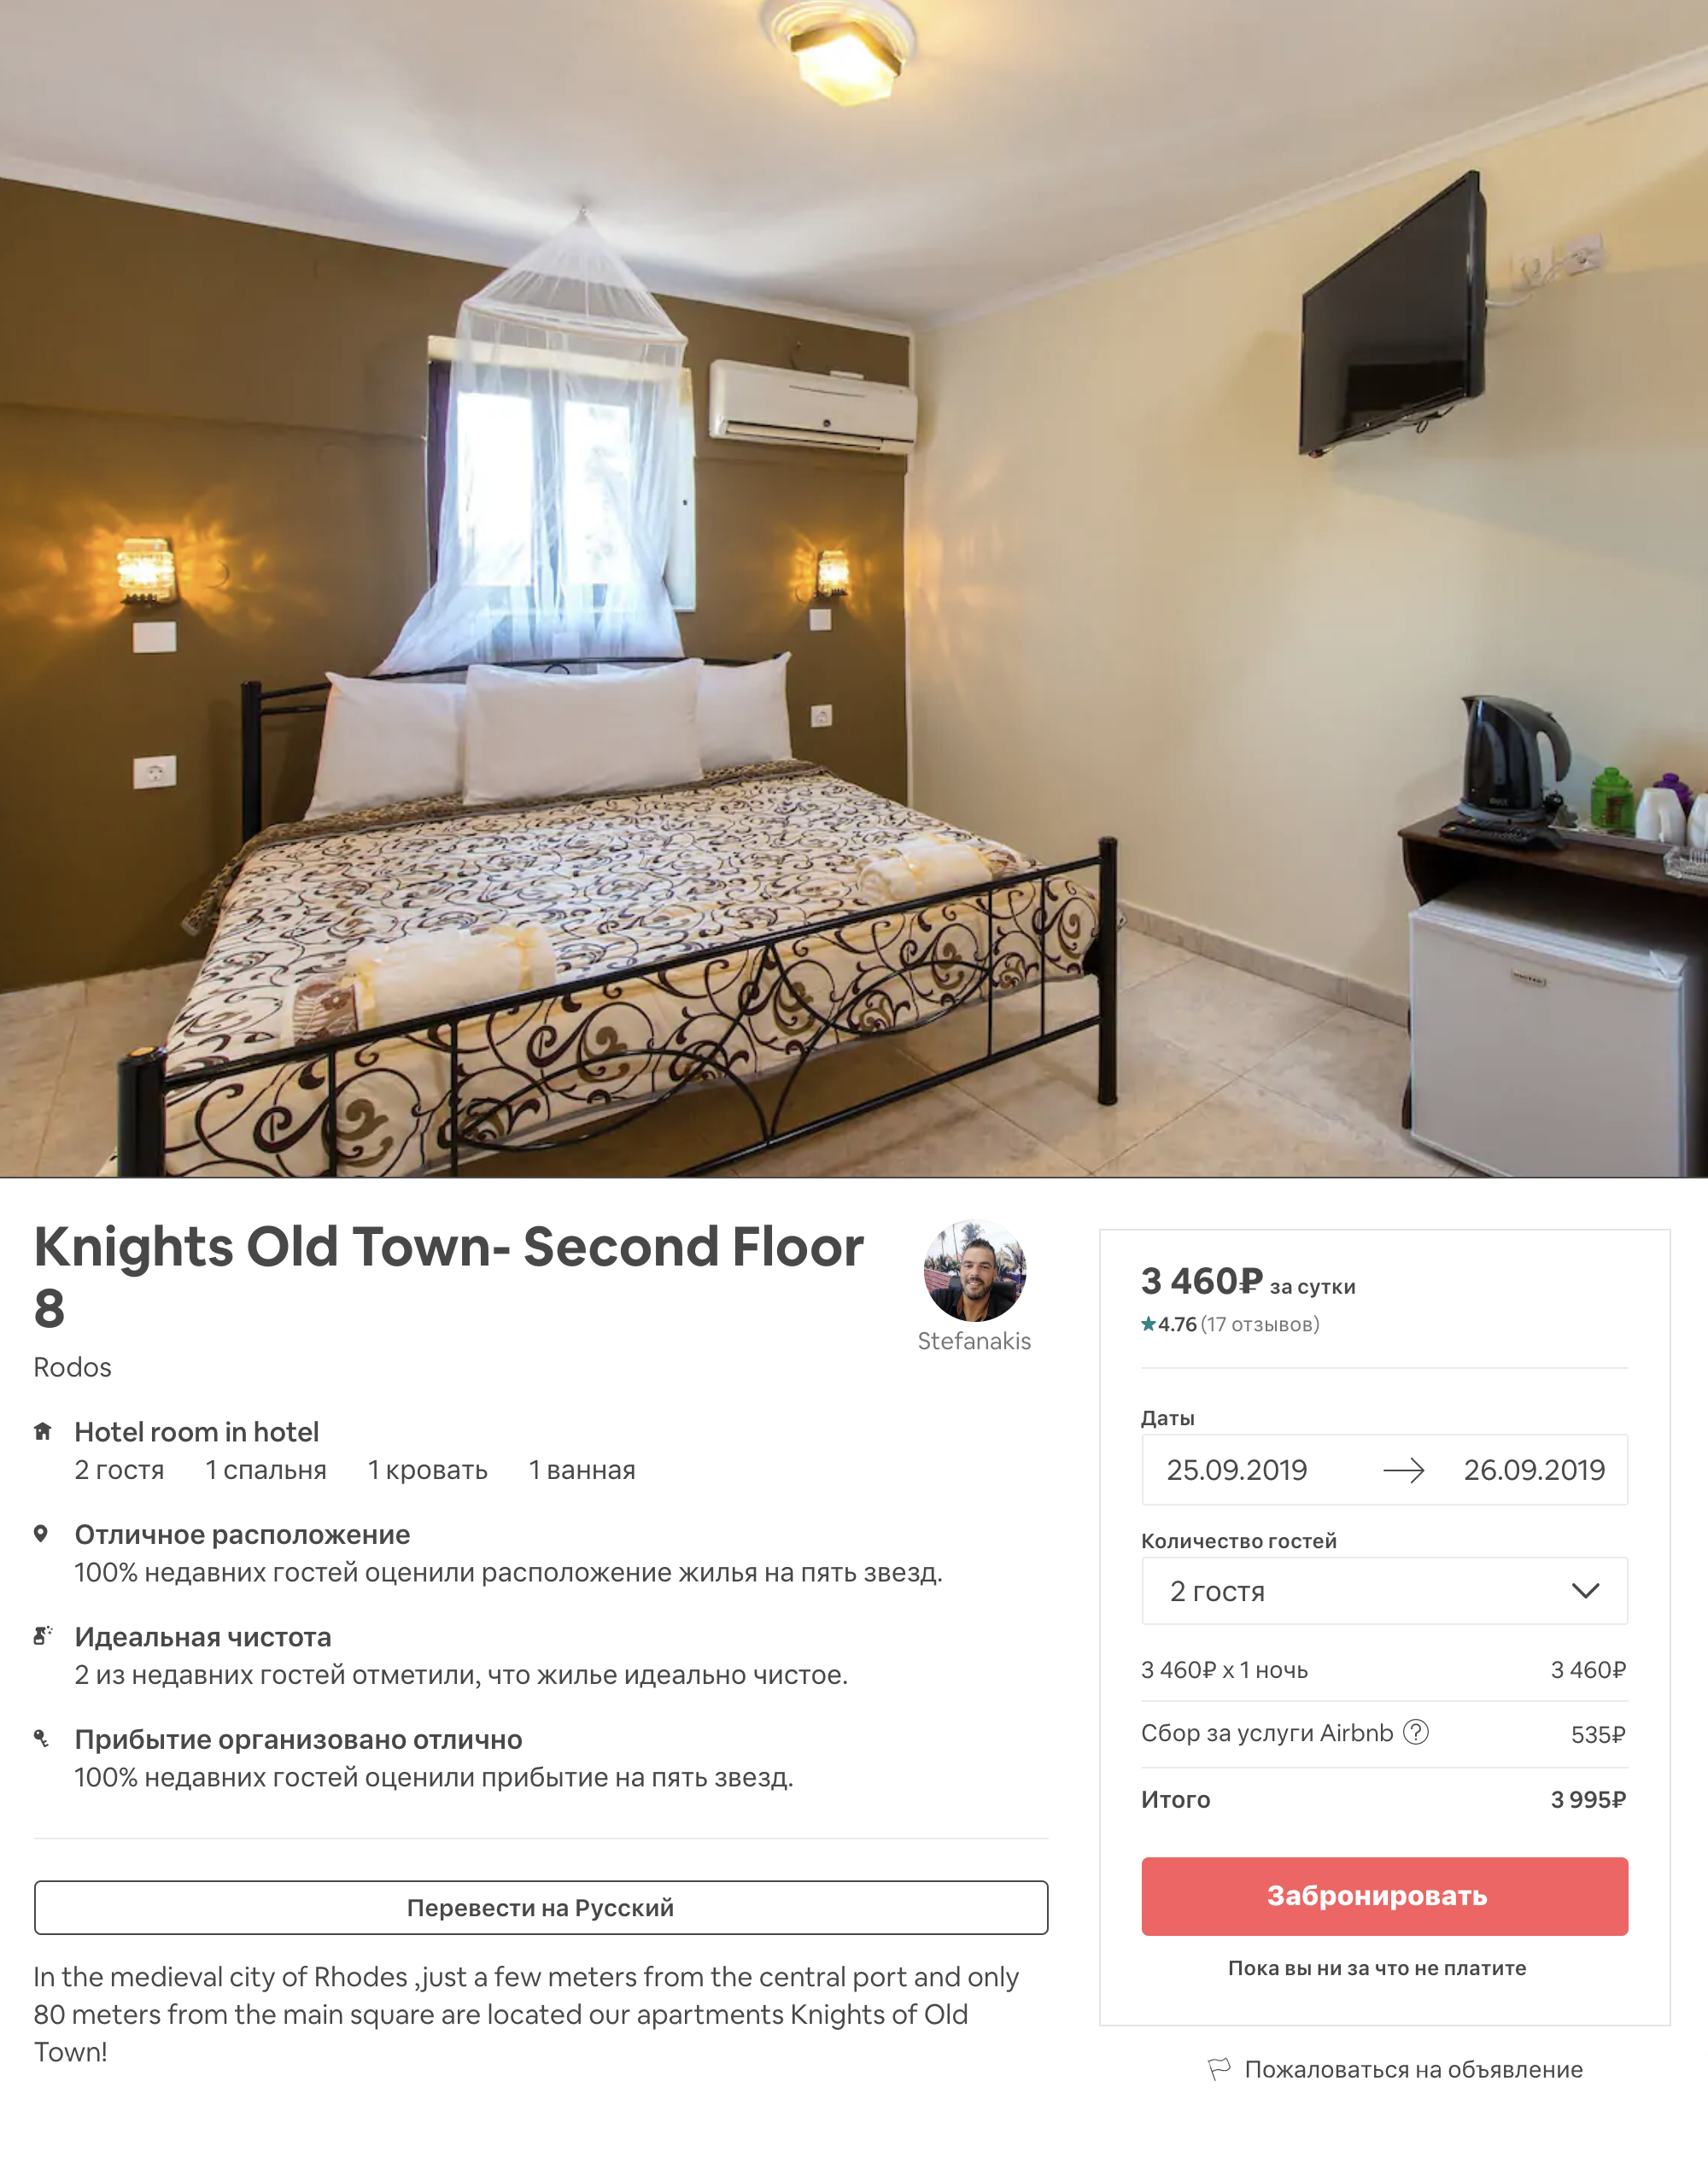 3640 ₽ за сутки — стандартная цена за номер в гостинице в центре города Родос в сентябре 2019 года. Но это цена без комиссии Airbnb